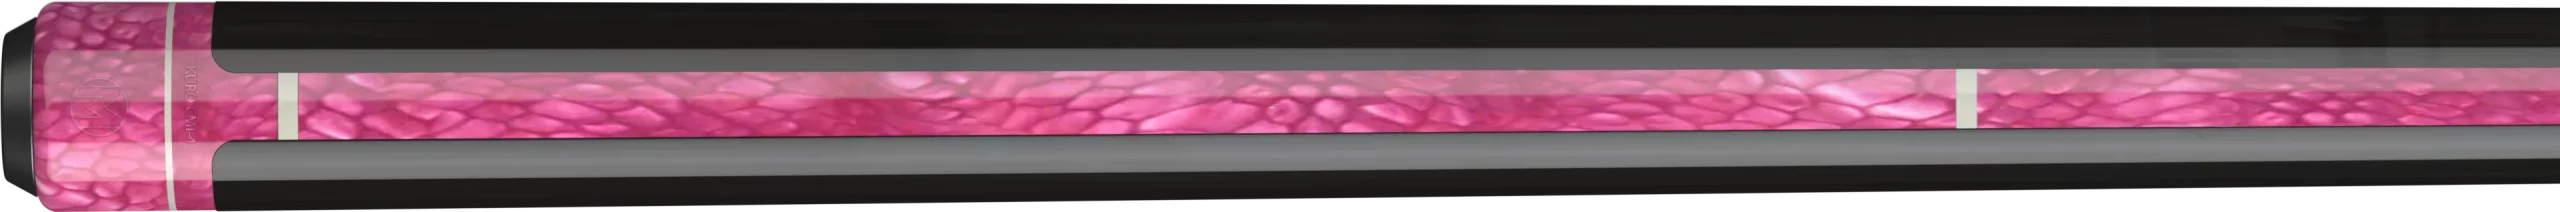 std 2024 - kuro - cmi-4 - pink dragon - molinari billiards carbon cue - butt